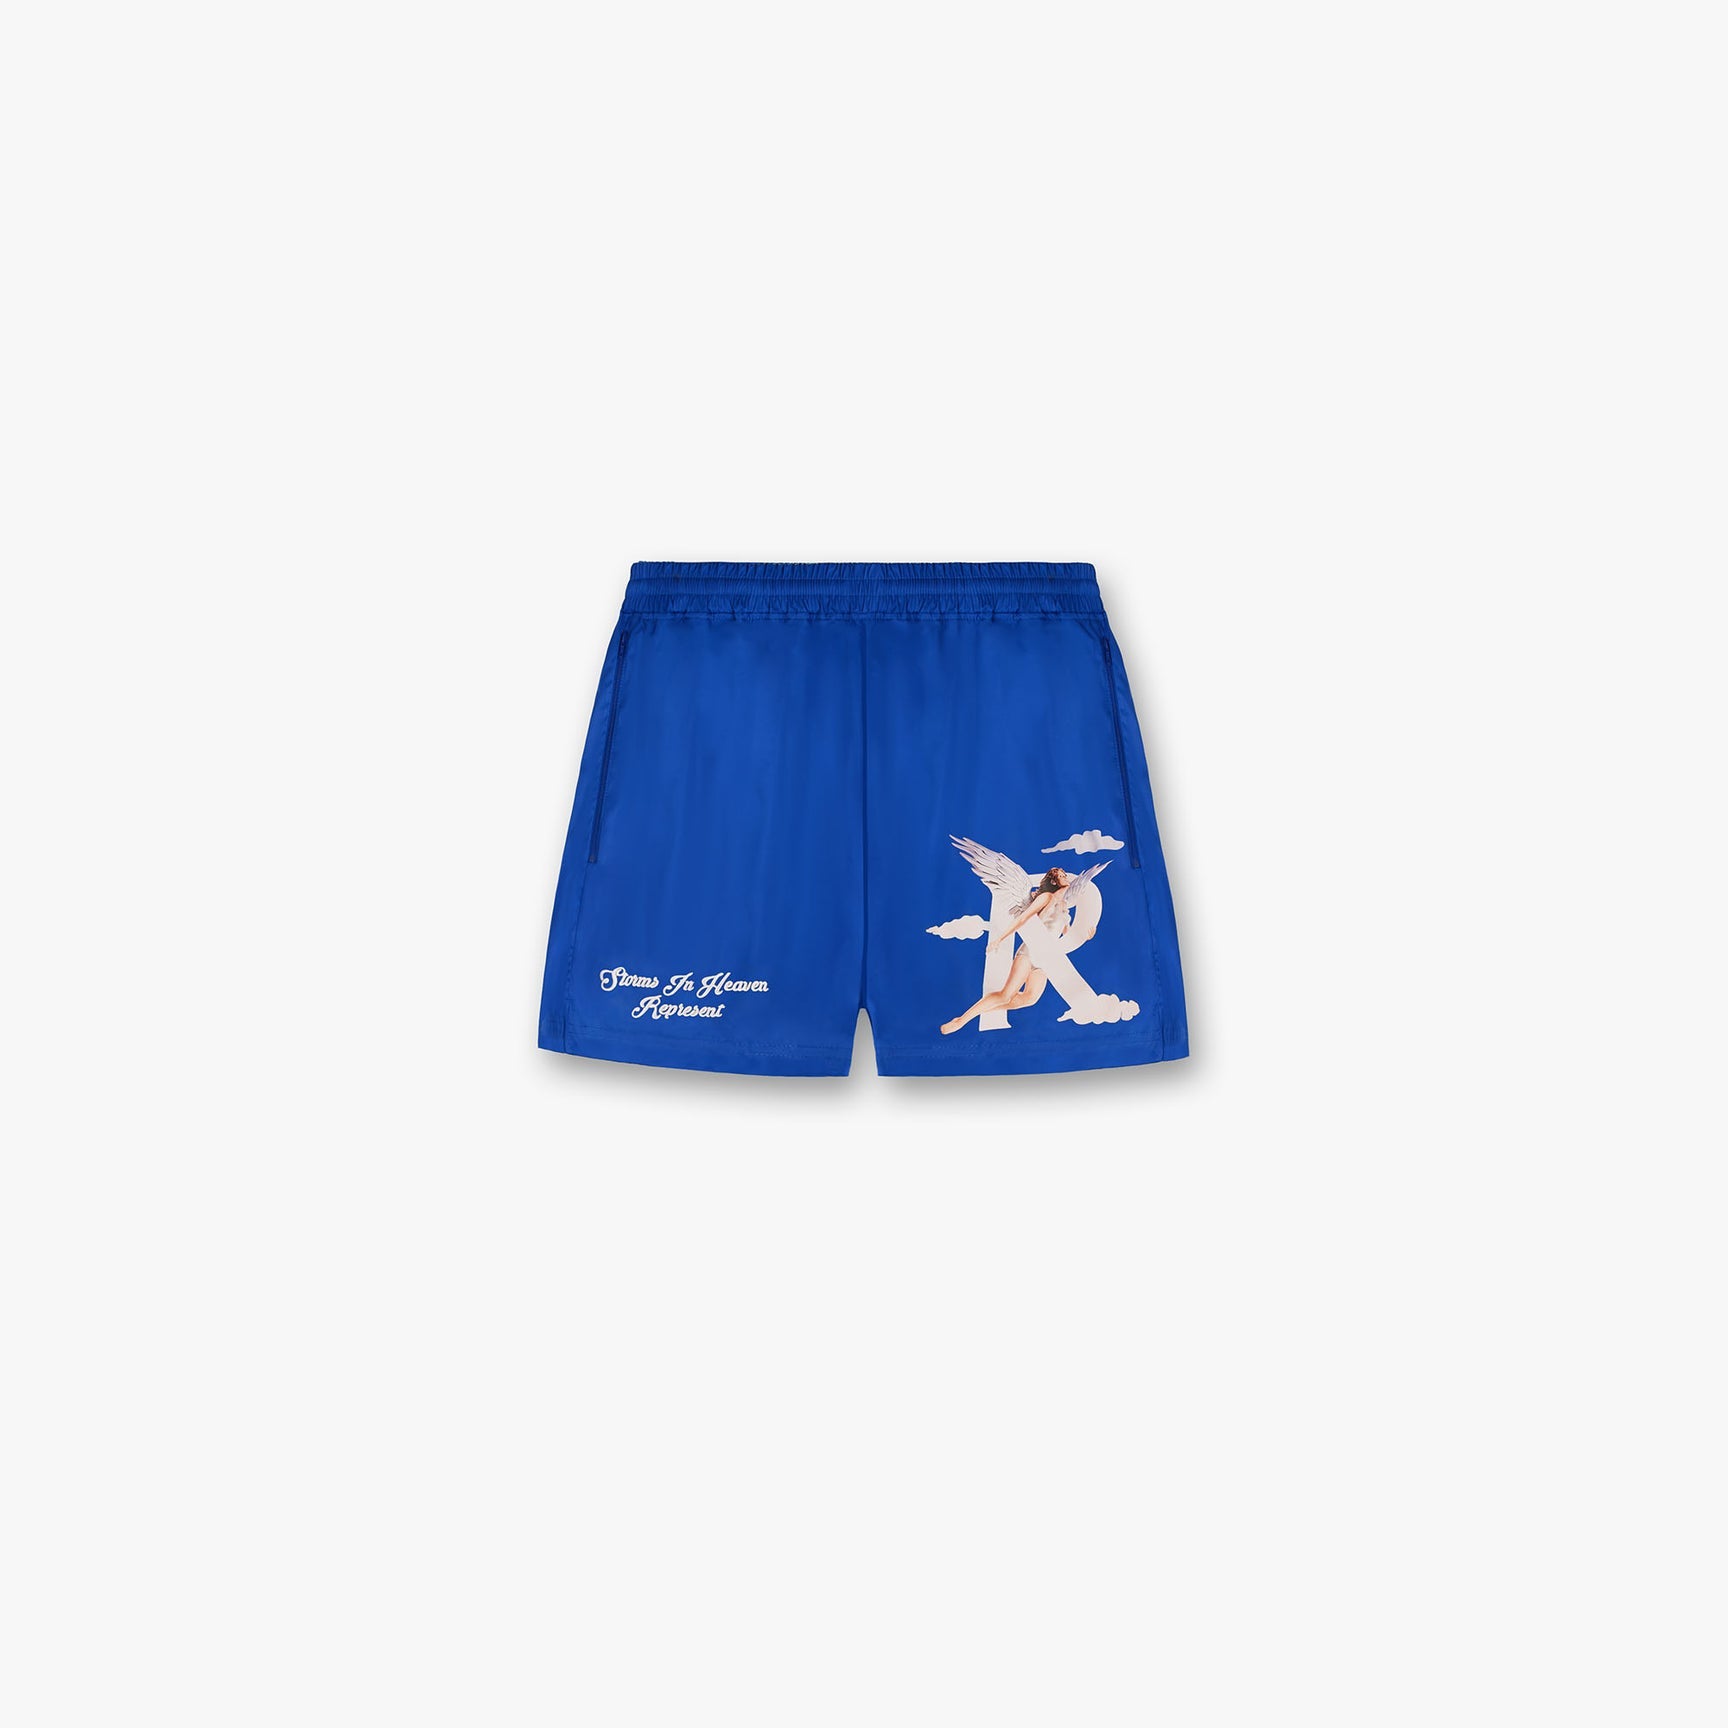 Represent Owners Club Mesh Shorts, Cobalt Shorts